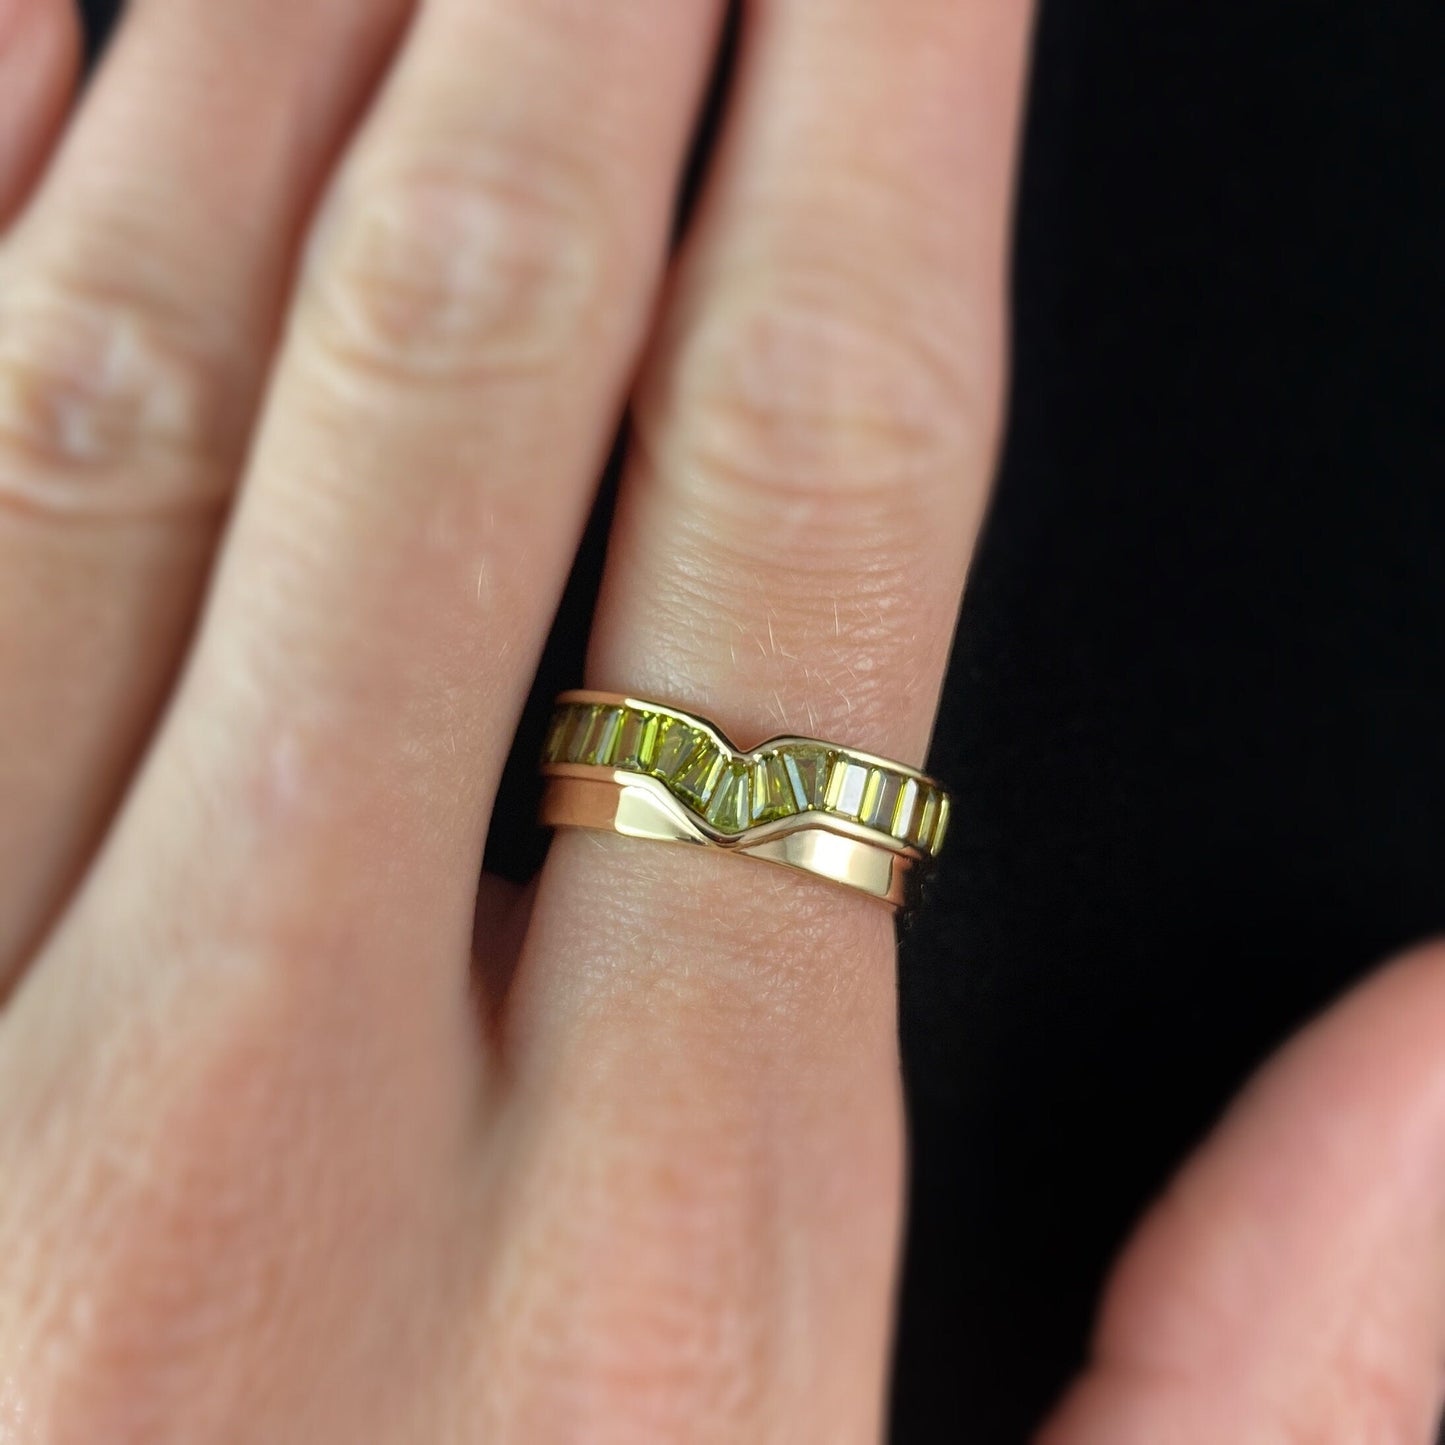 1920s Art Deco Style Gold Ring with Chevron Peak Peridot Green Stones - Size 6